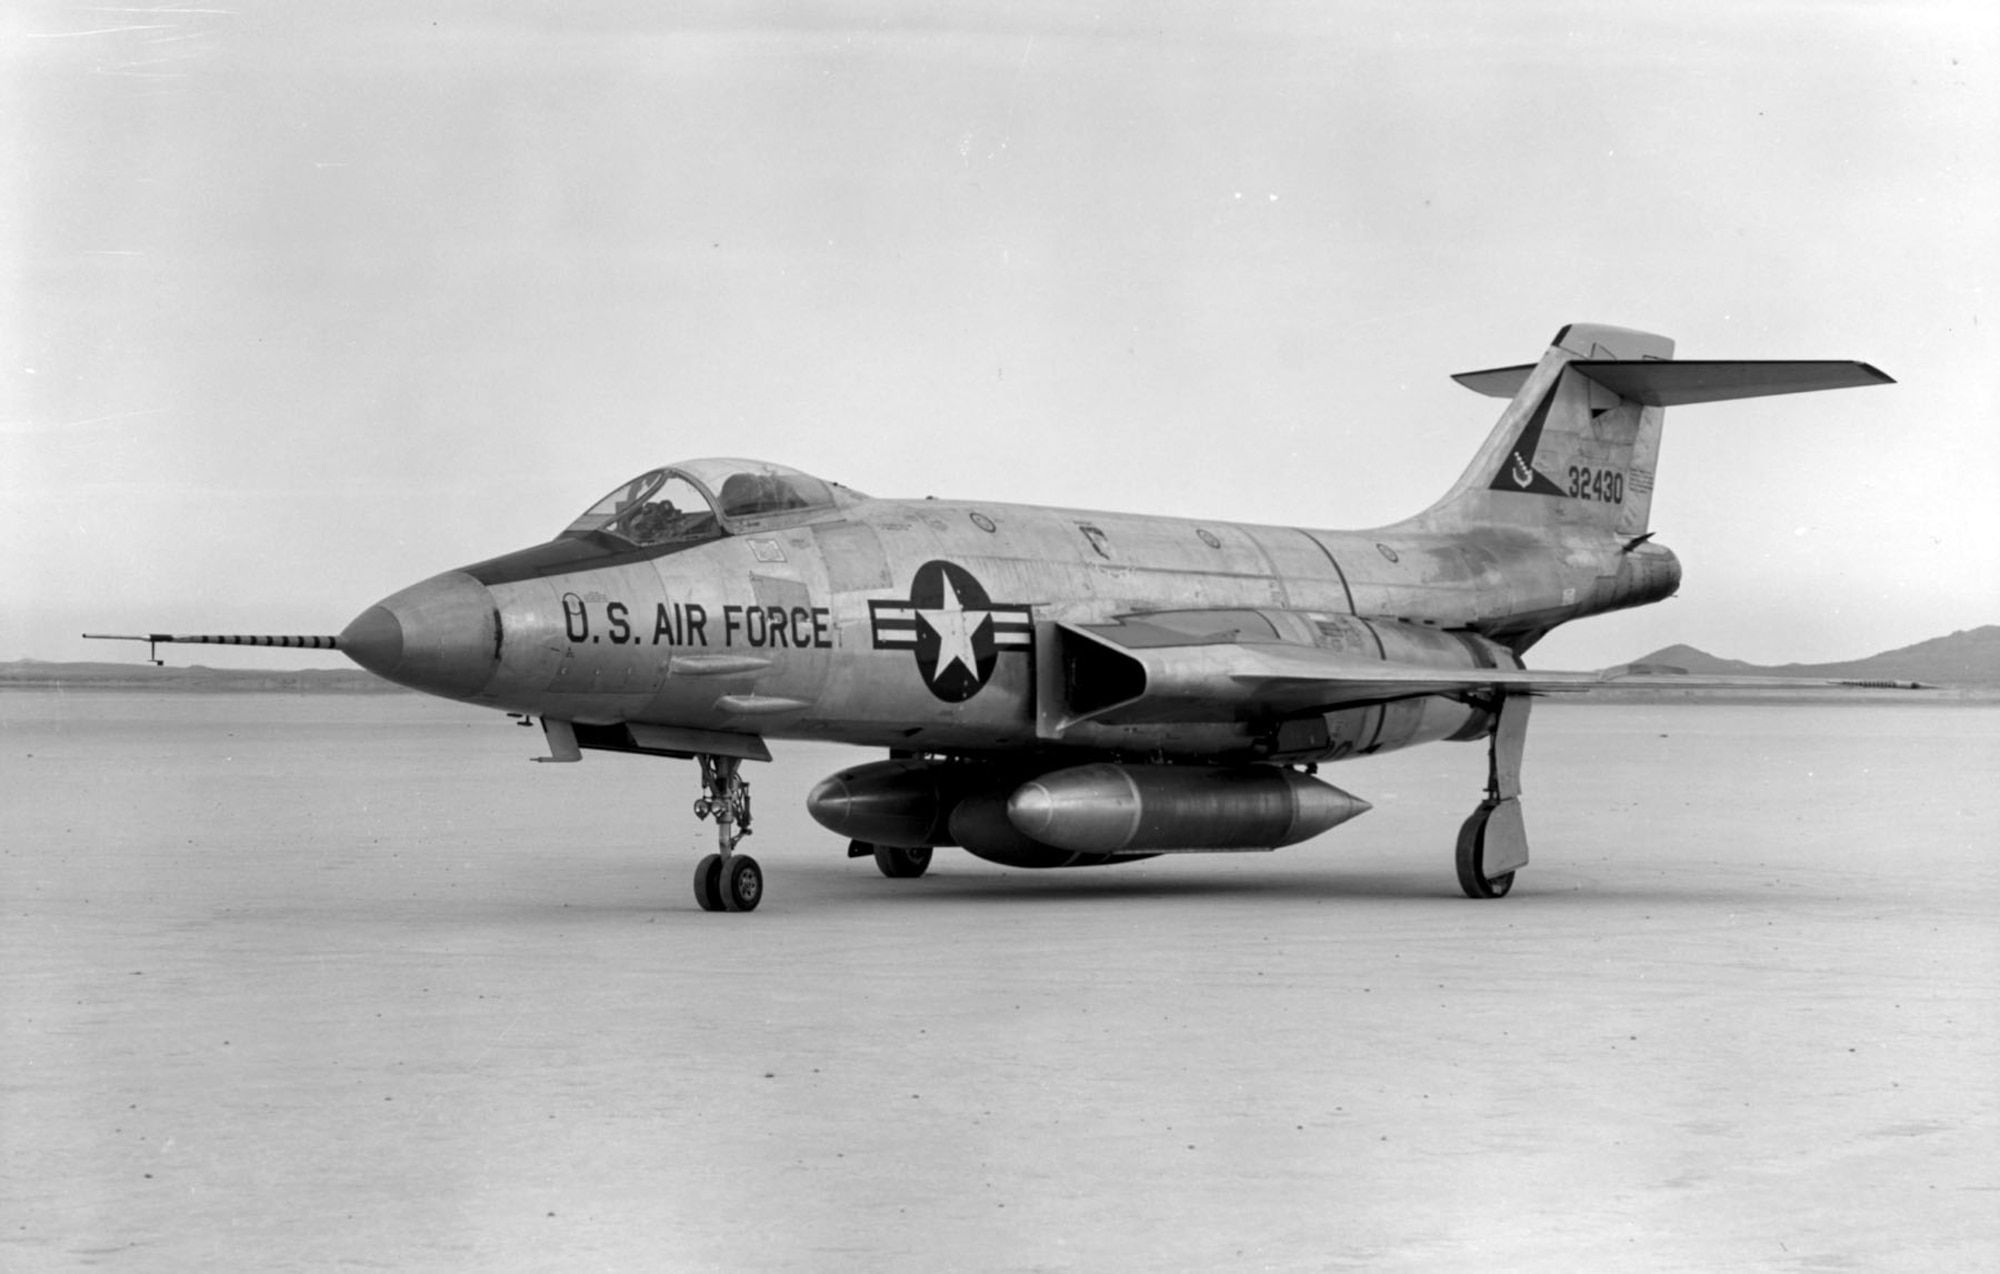 McDonnell F-101A. (U.S. Air Force photo)